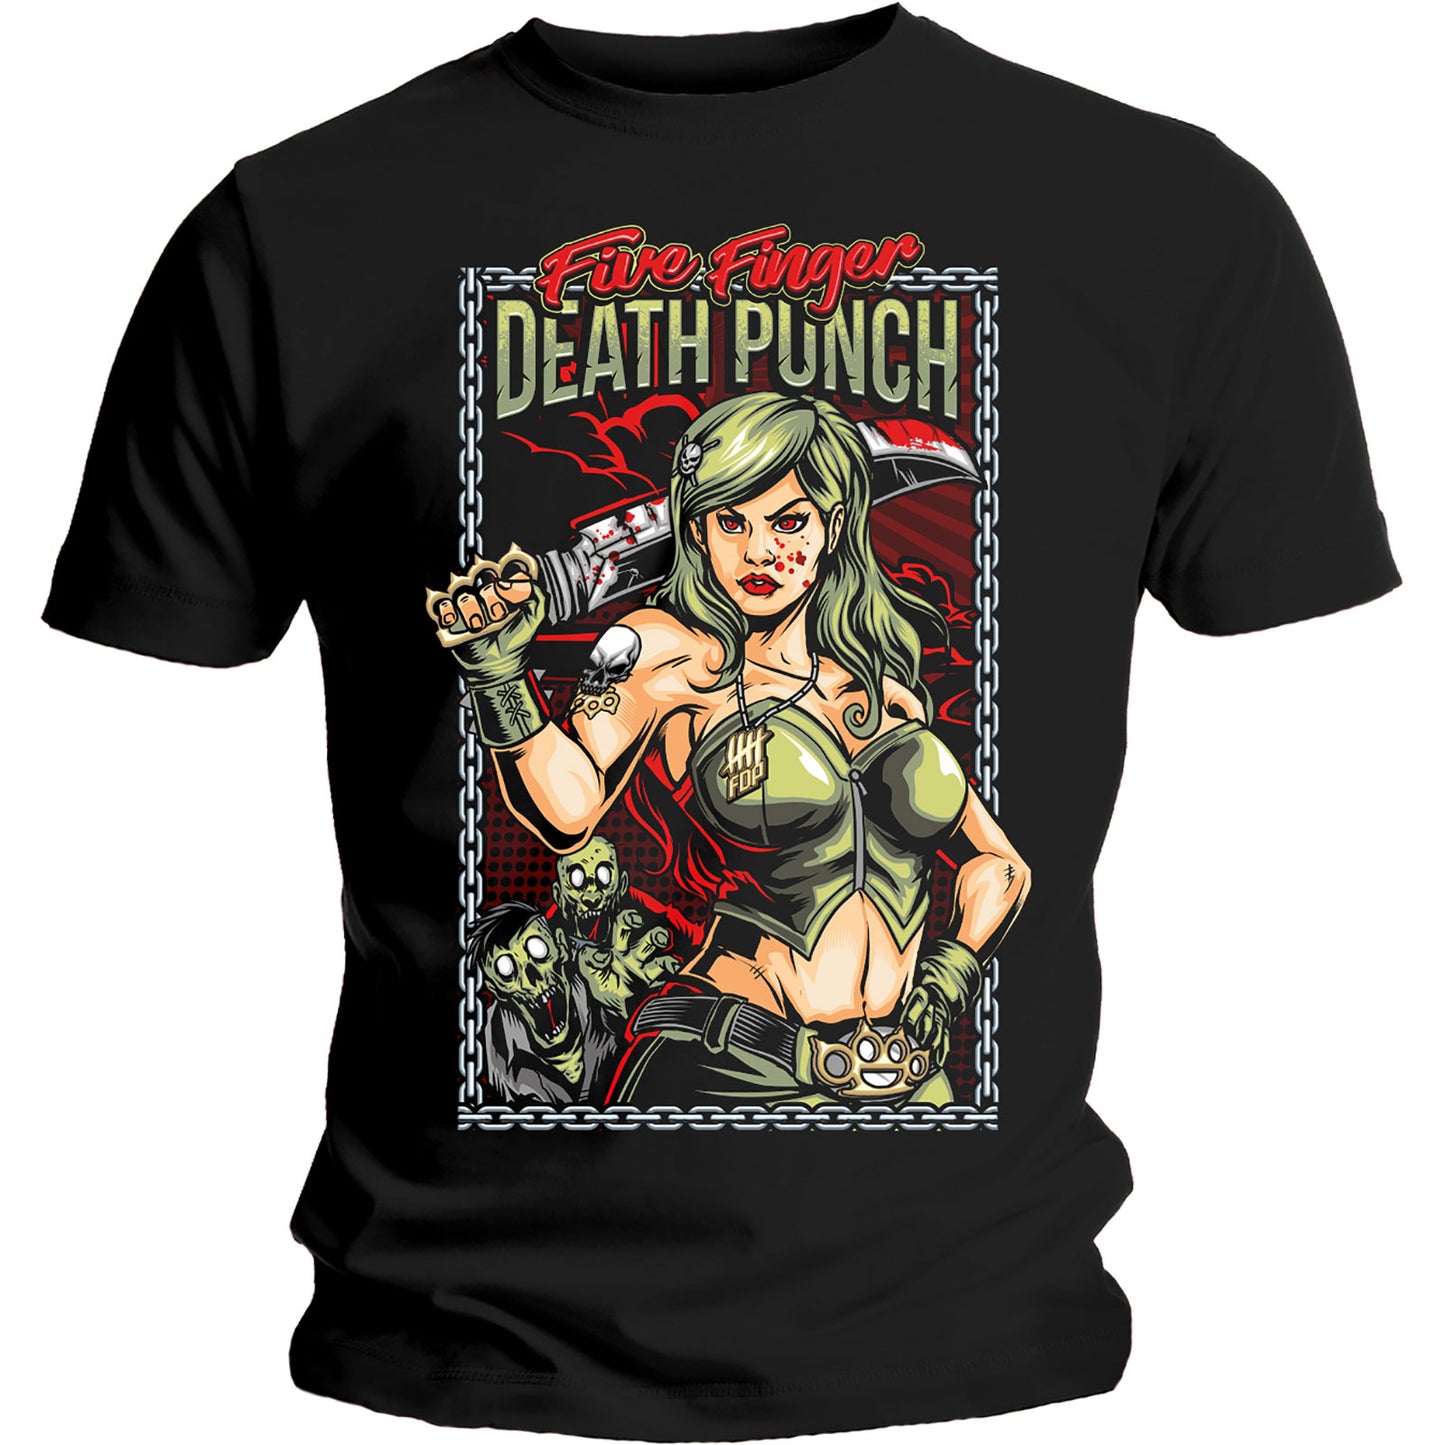 Five finger death punch / Assassin